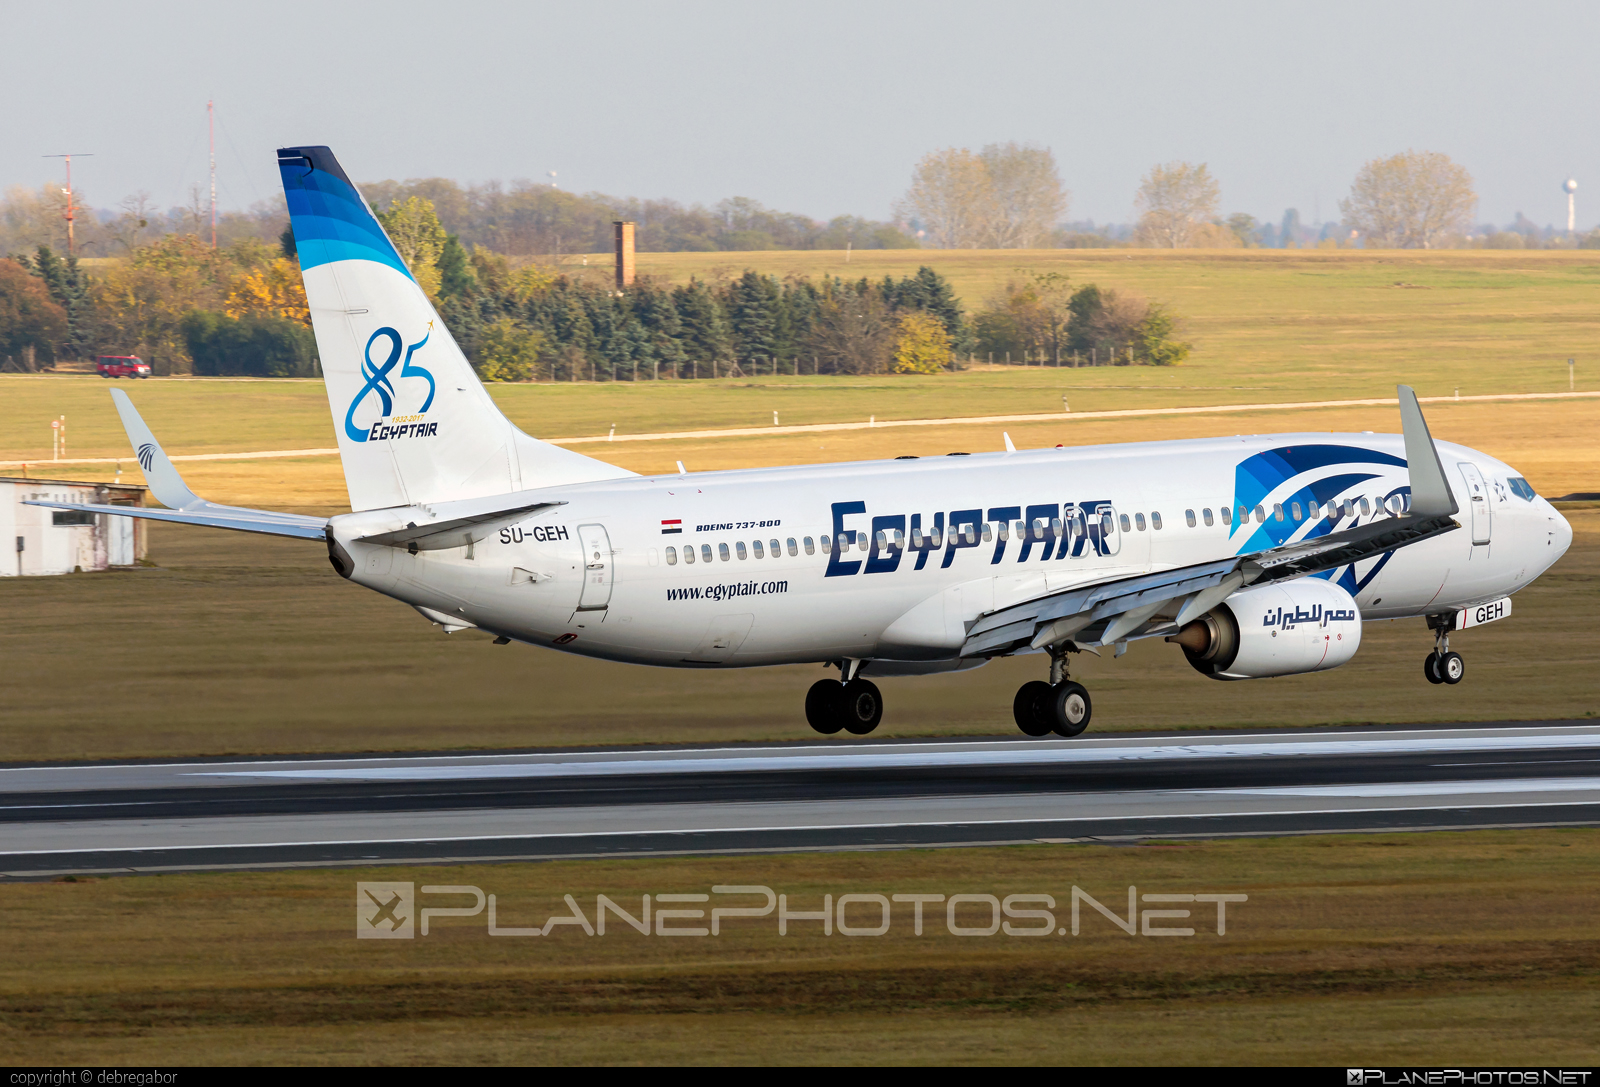 Su Geh Boeing 737 800 Operated By Egyptair Taken By Debregabor